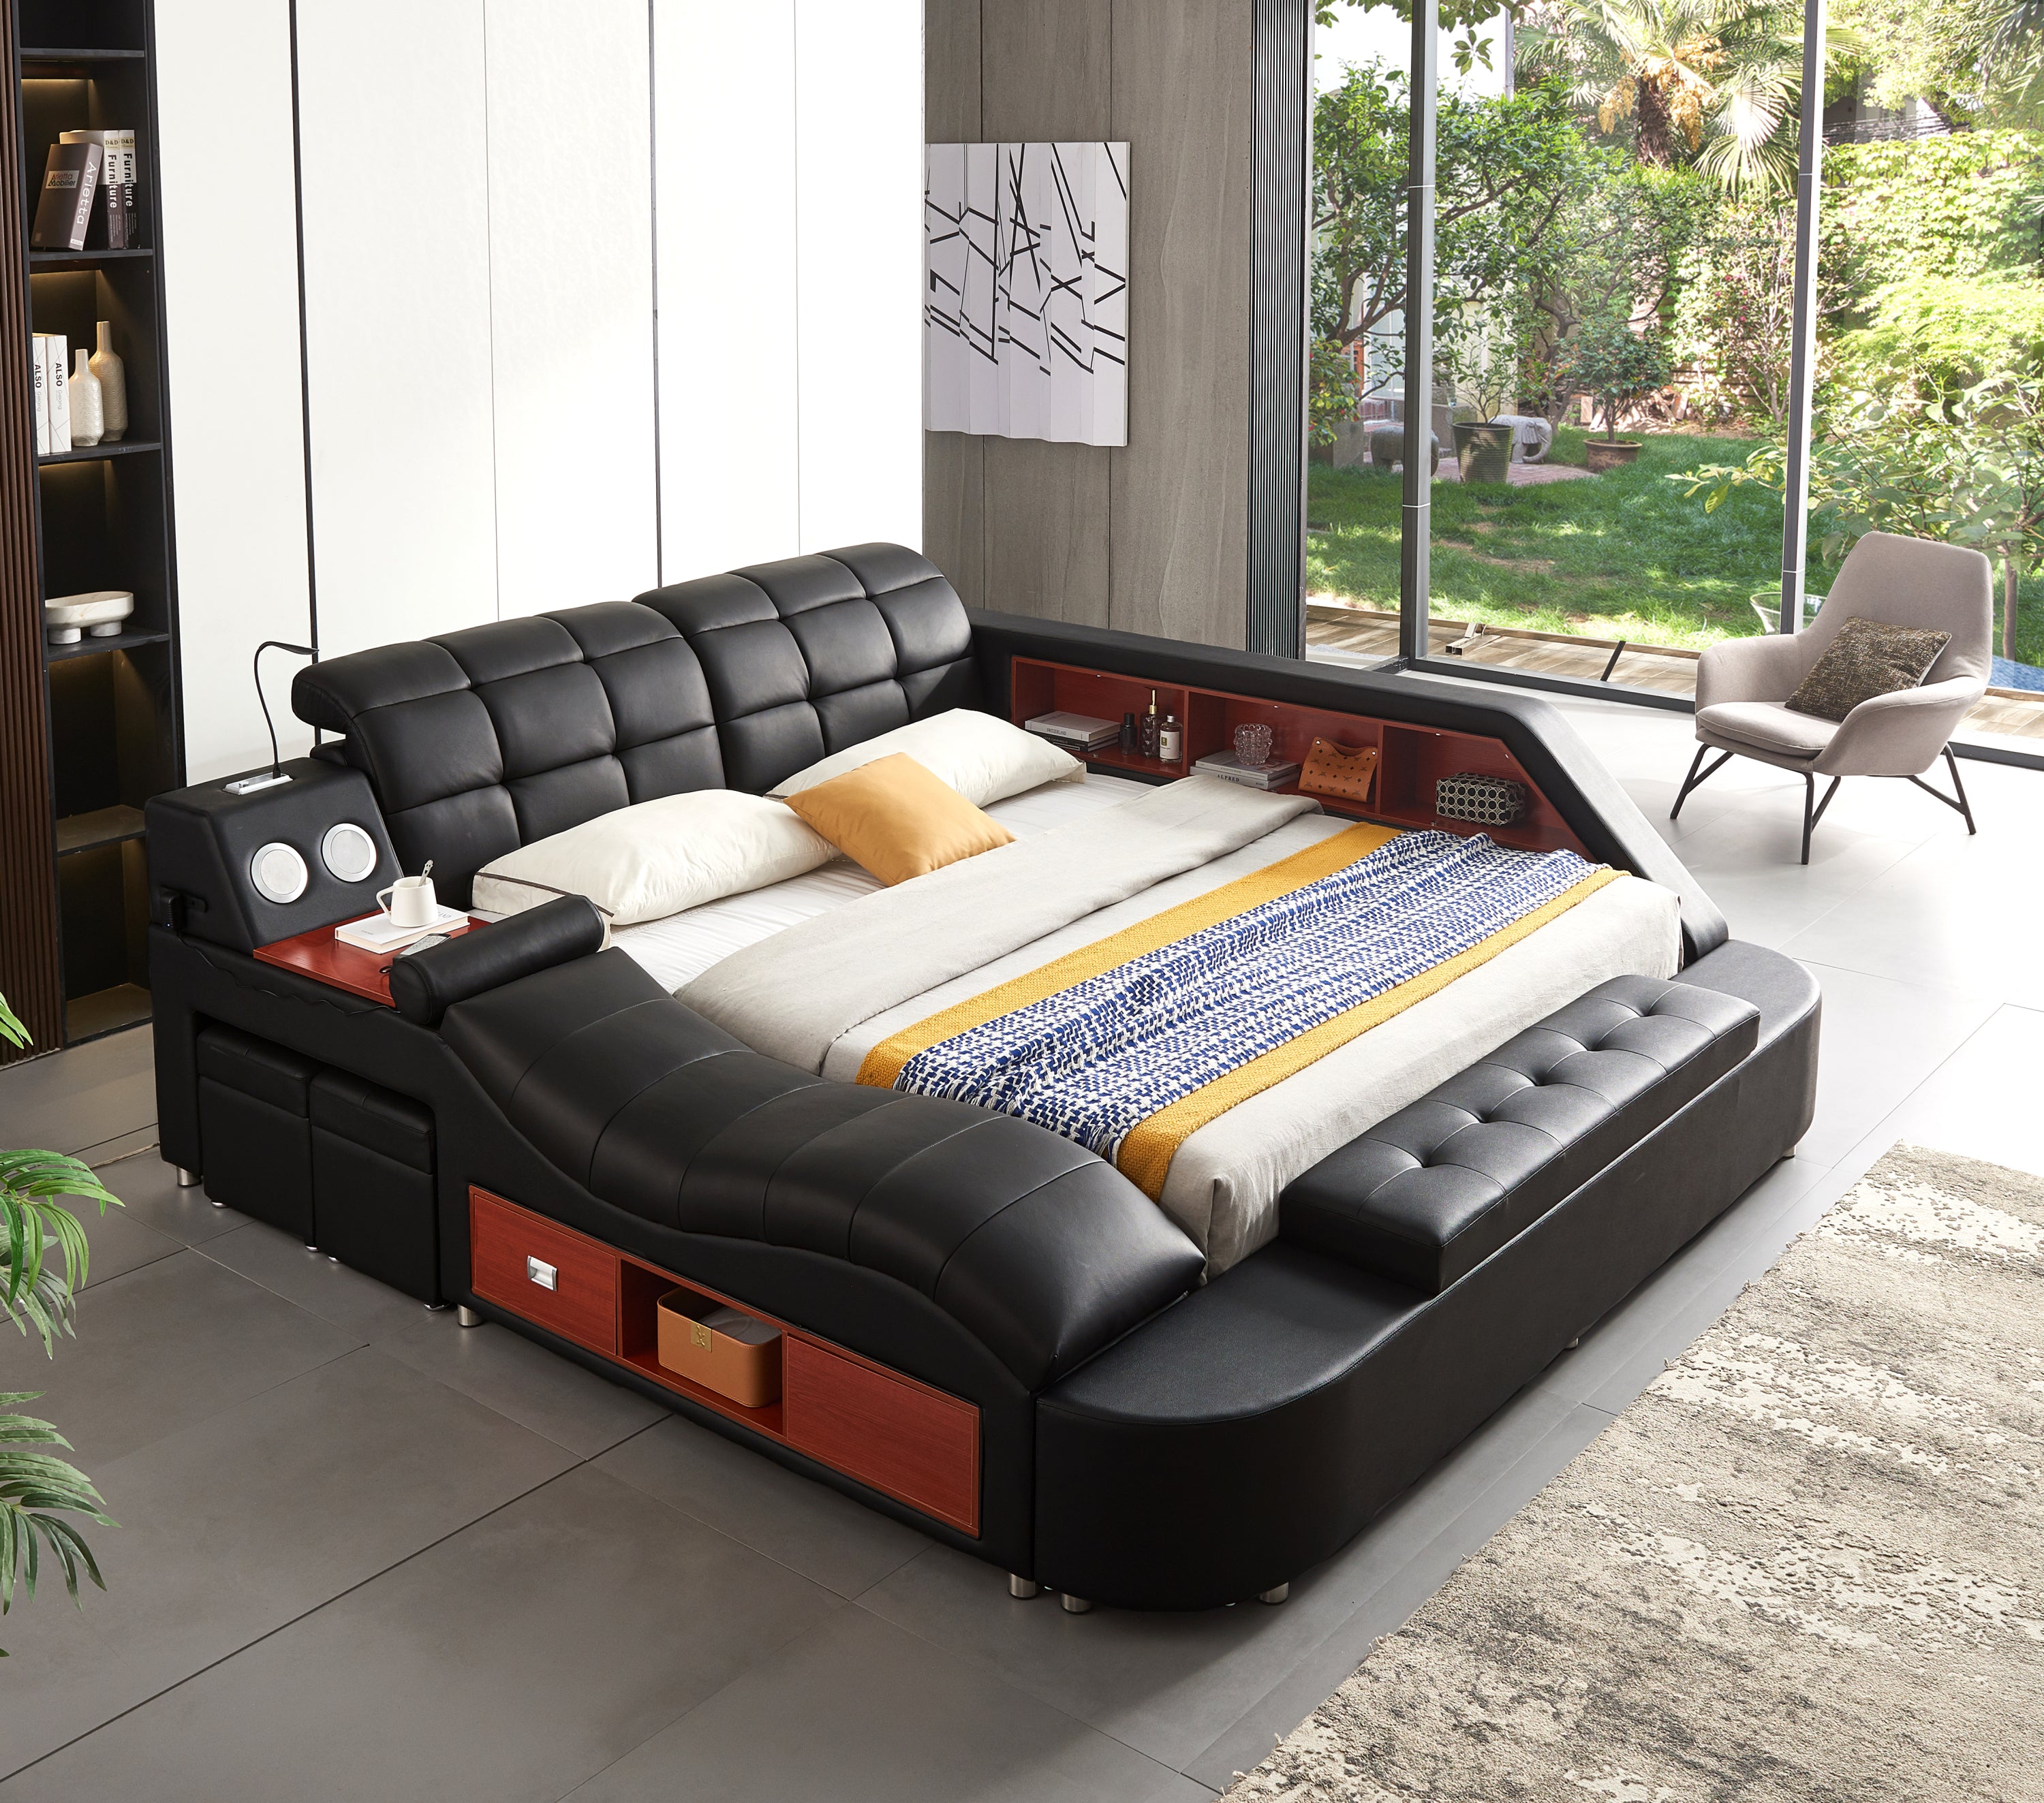 Multifunctional Upholstered Storage Bed Frame, Massage Chaise Lounge on Left, King Size, Black